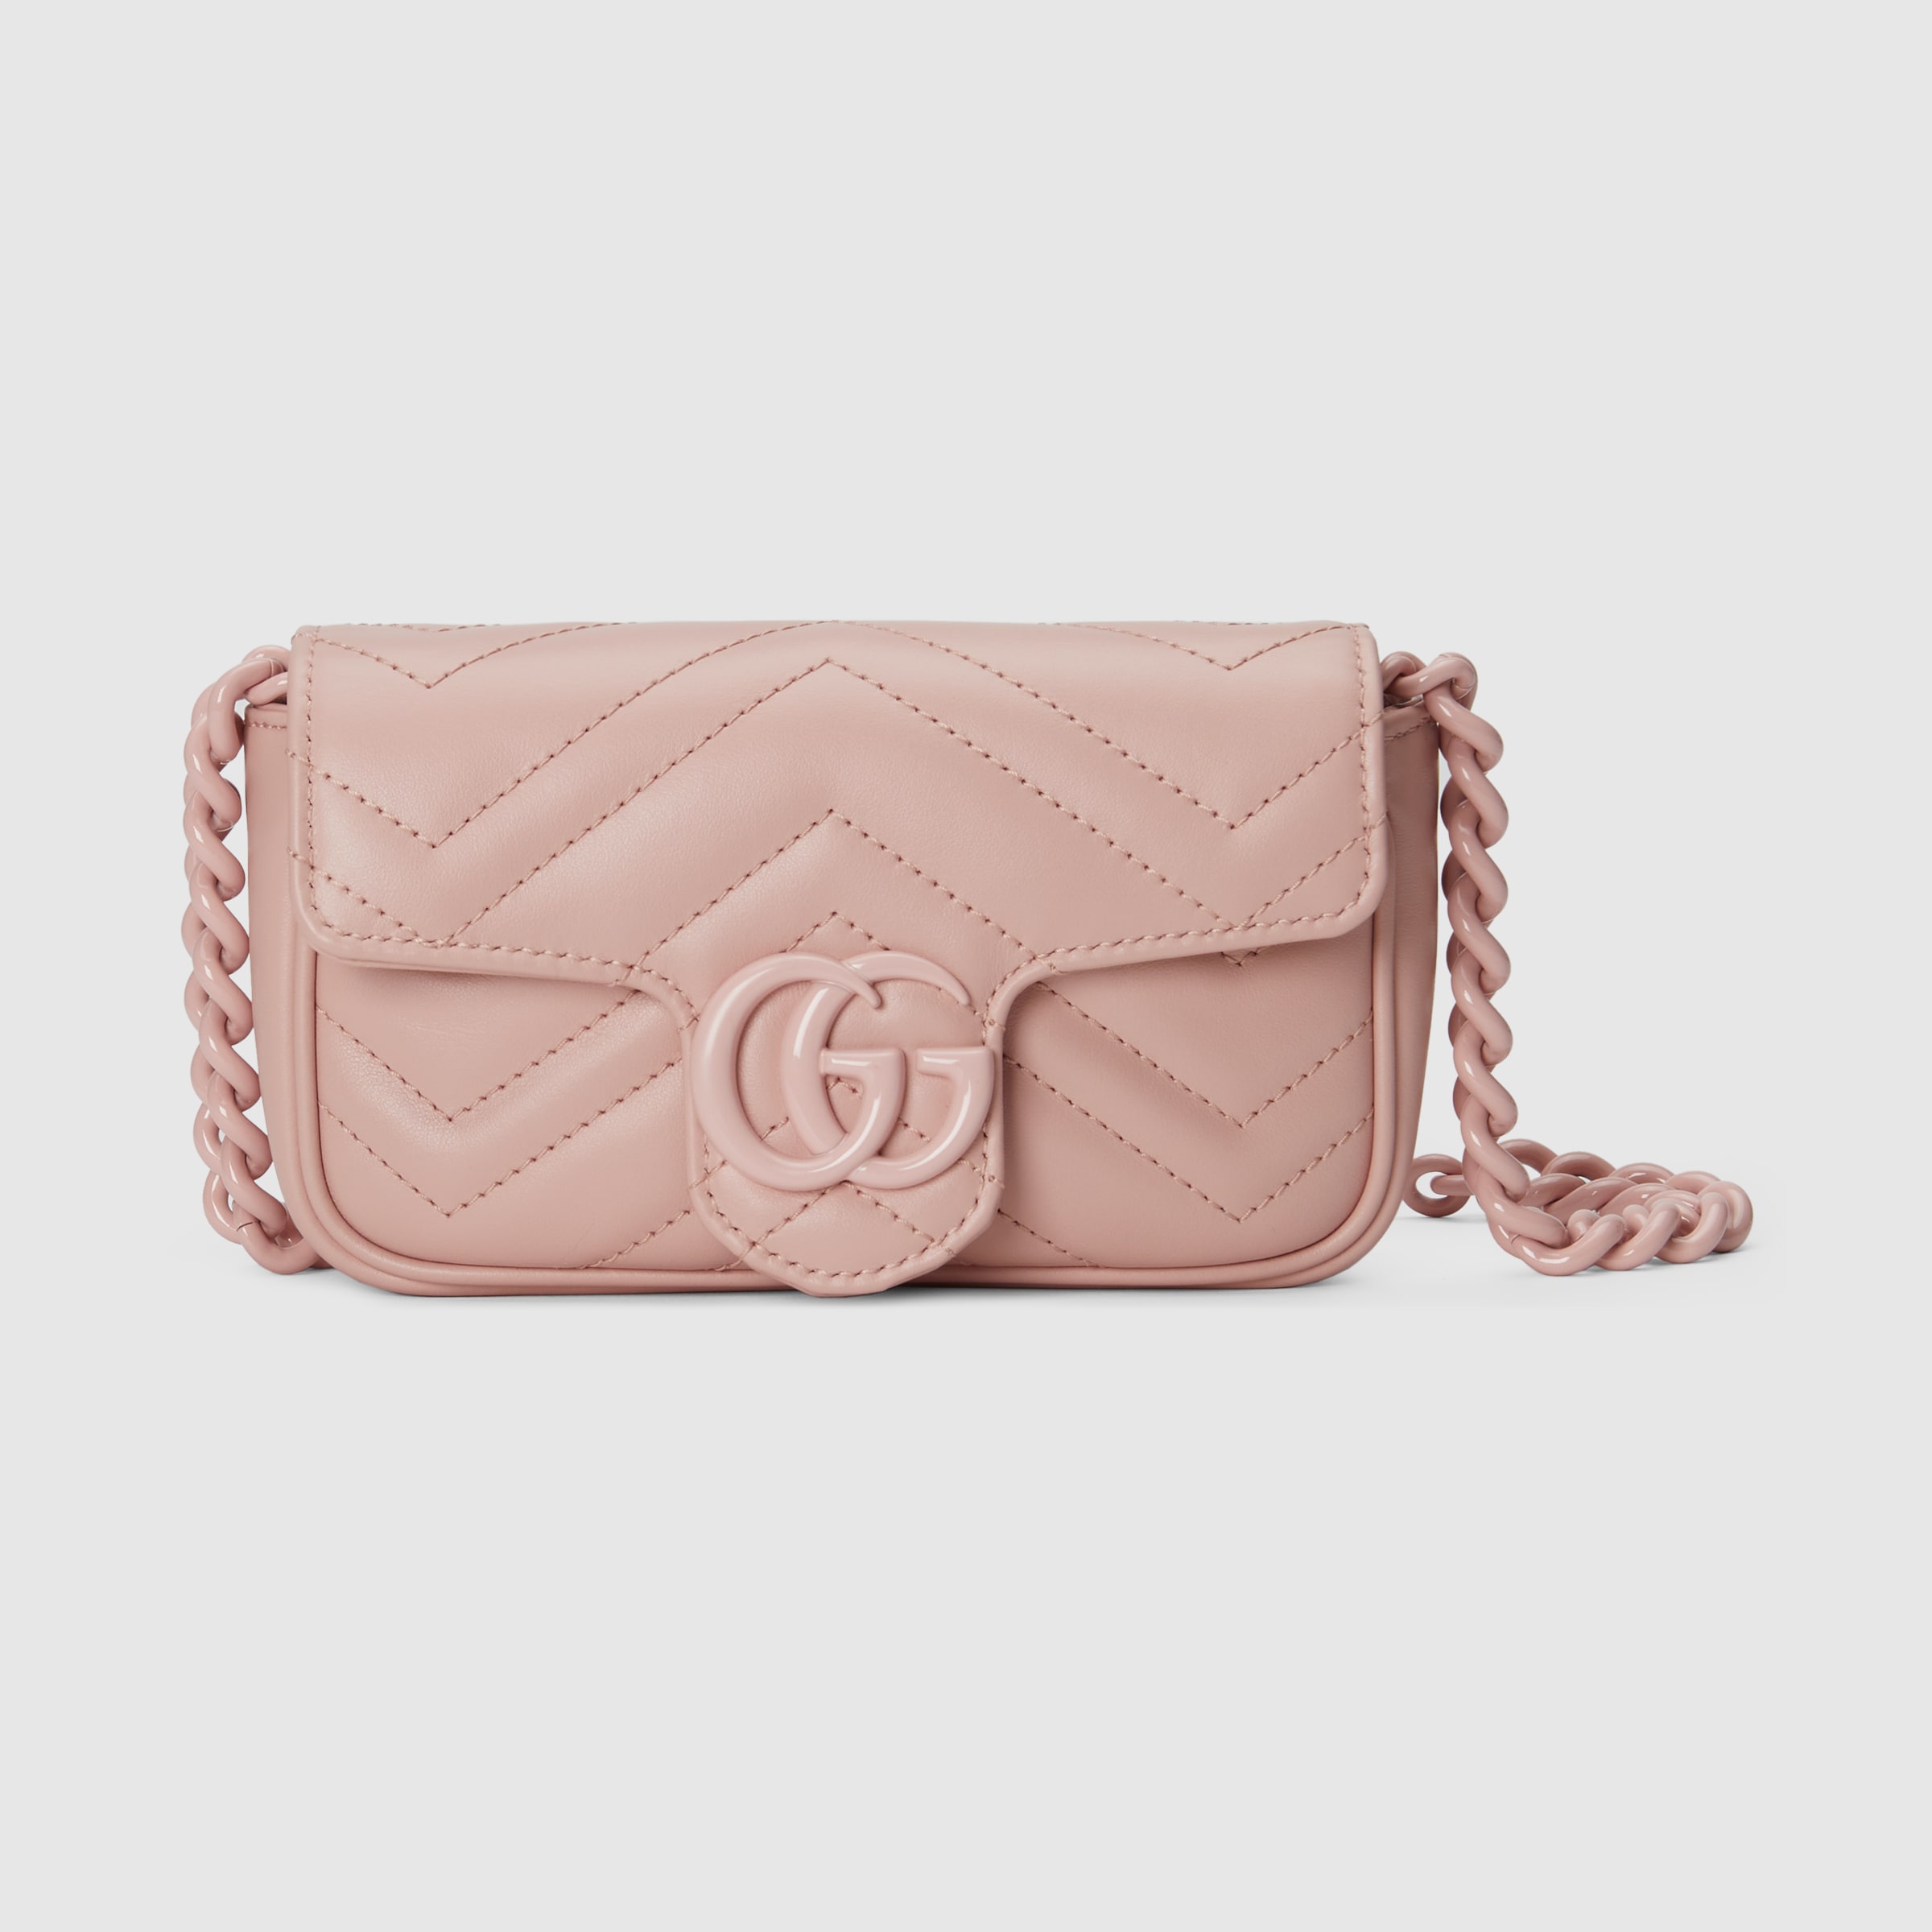 Gucci gg marmont belt bag